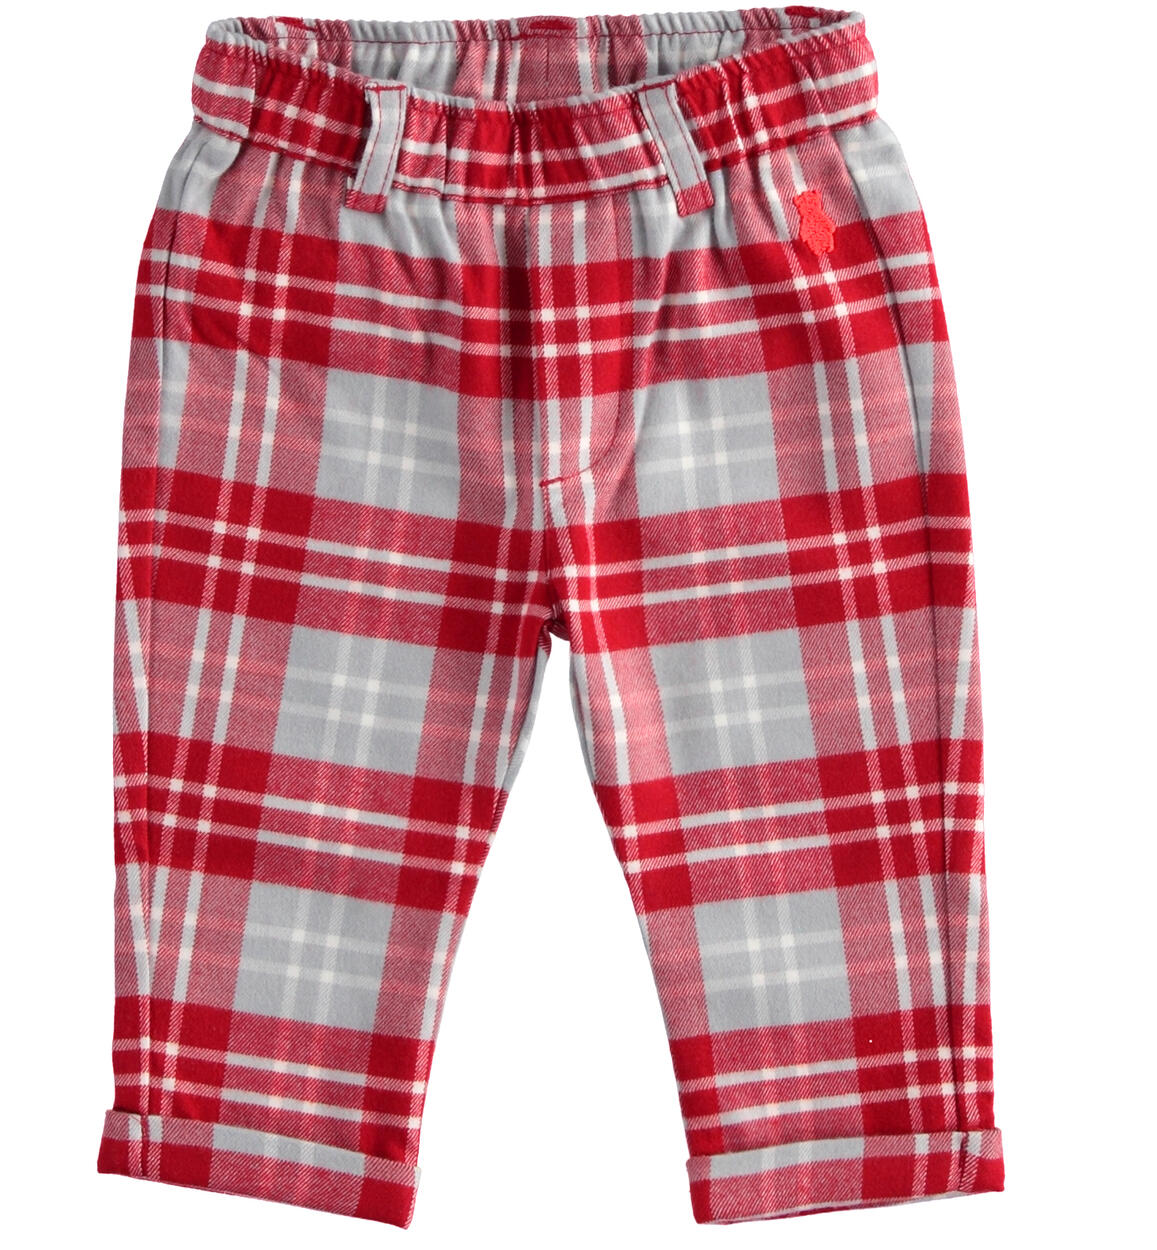 Pantalone scozzese bimbo ROSSO Minibanda